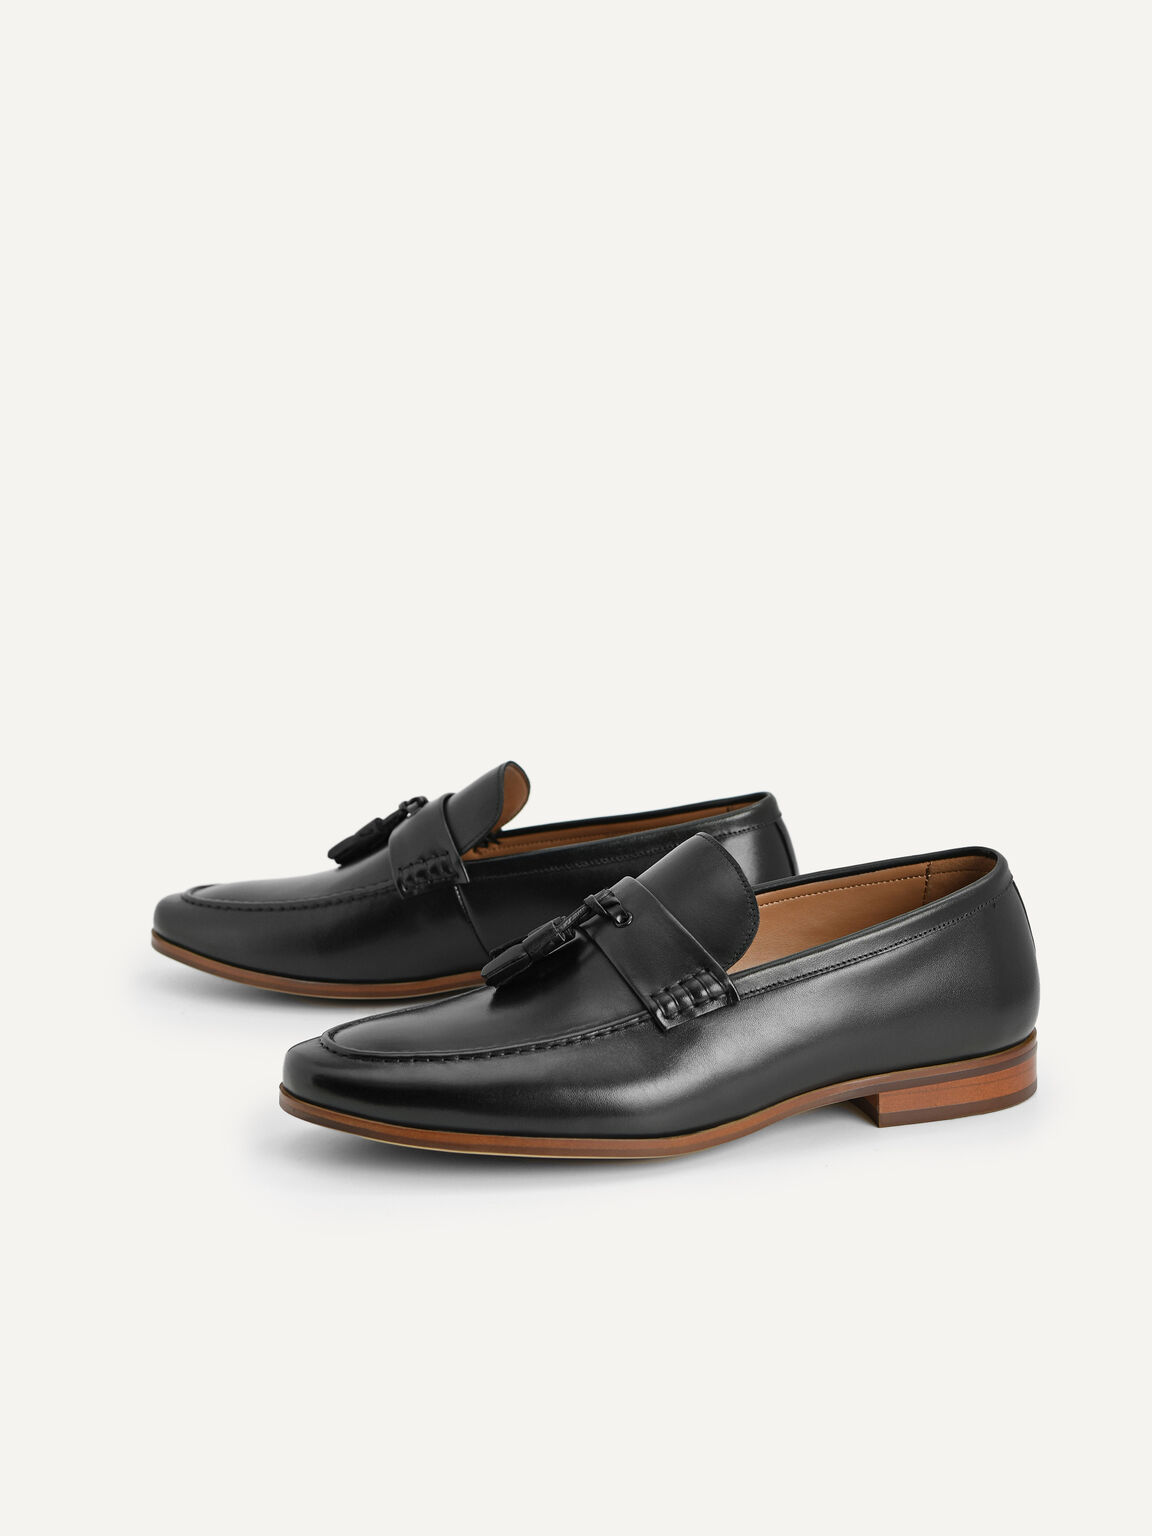 Leather Tasselled Loafers, Black, hi-res